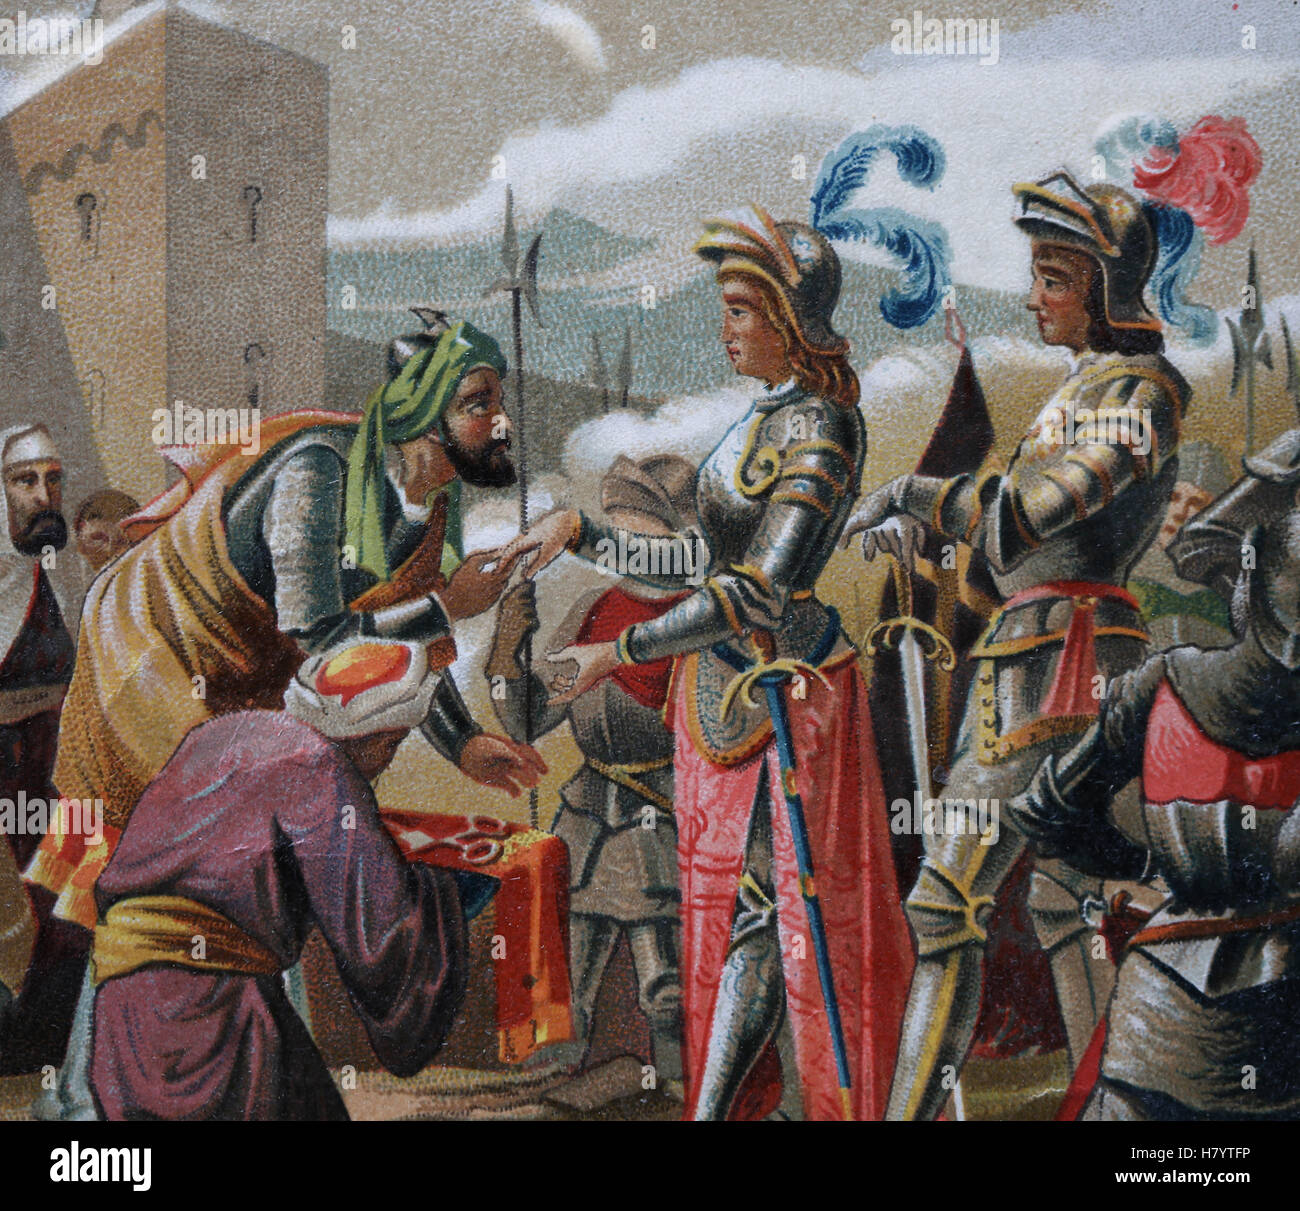 Péninsule ibérique Reconquista. La guerre de Grenade. Abandon de Grenade, 1492. Muhammad XII, Ferdniand II d'Aragon, Isabel JE Castille Banque D'Images